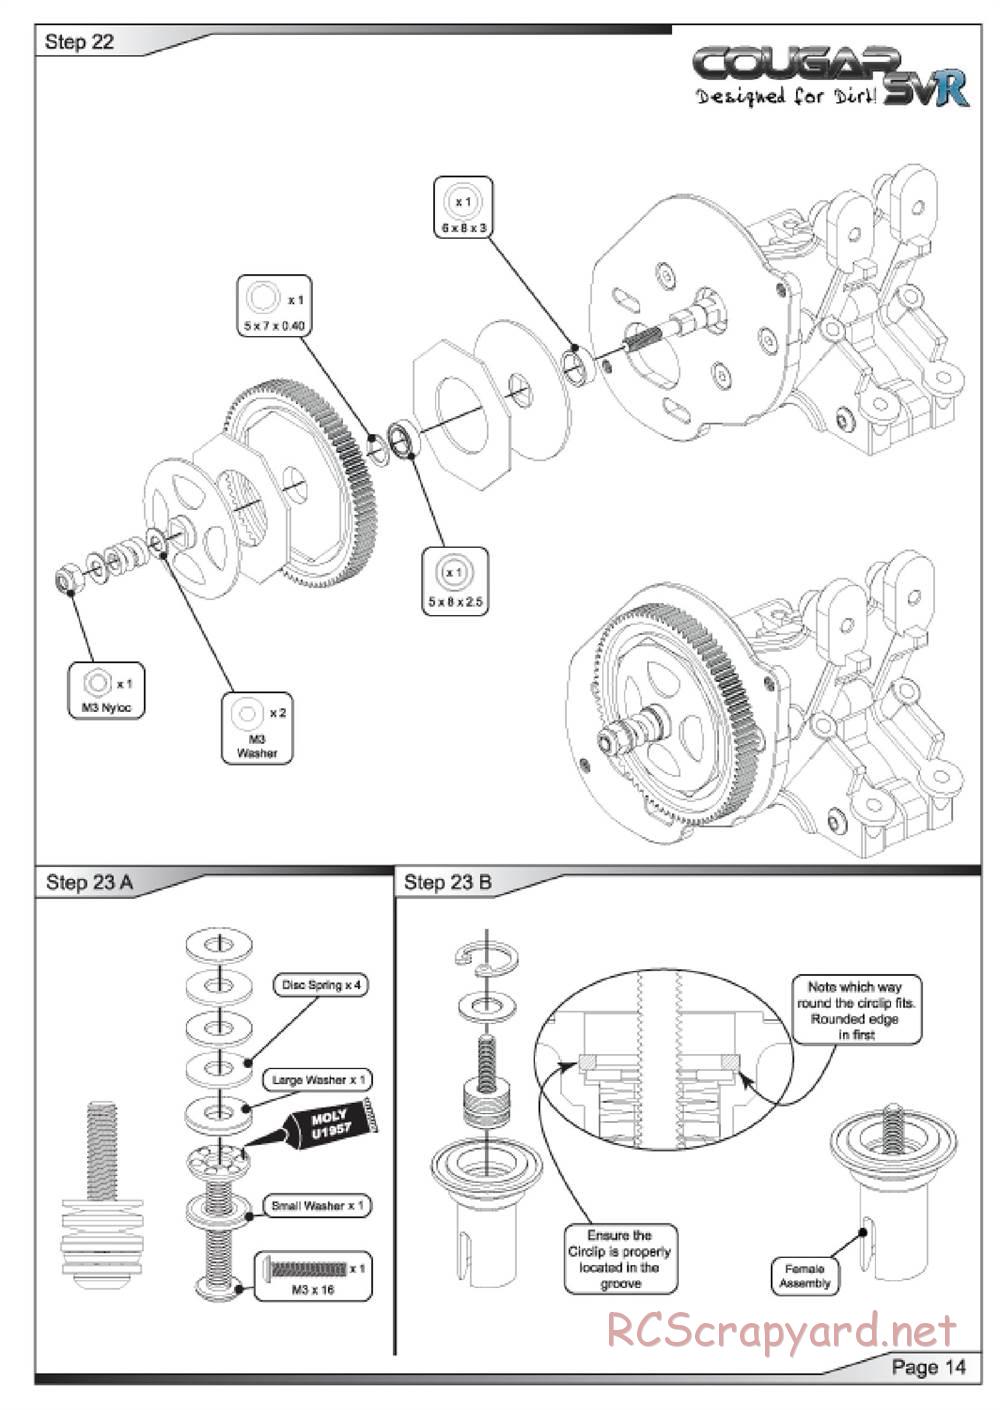 Schumacher - Cougar SVR - Manual - Page 15